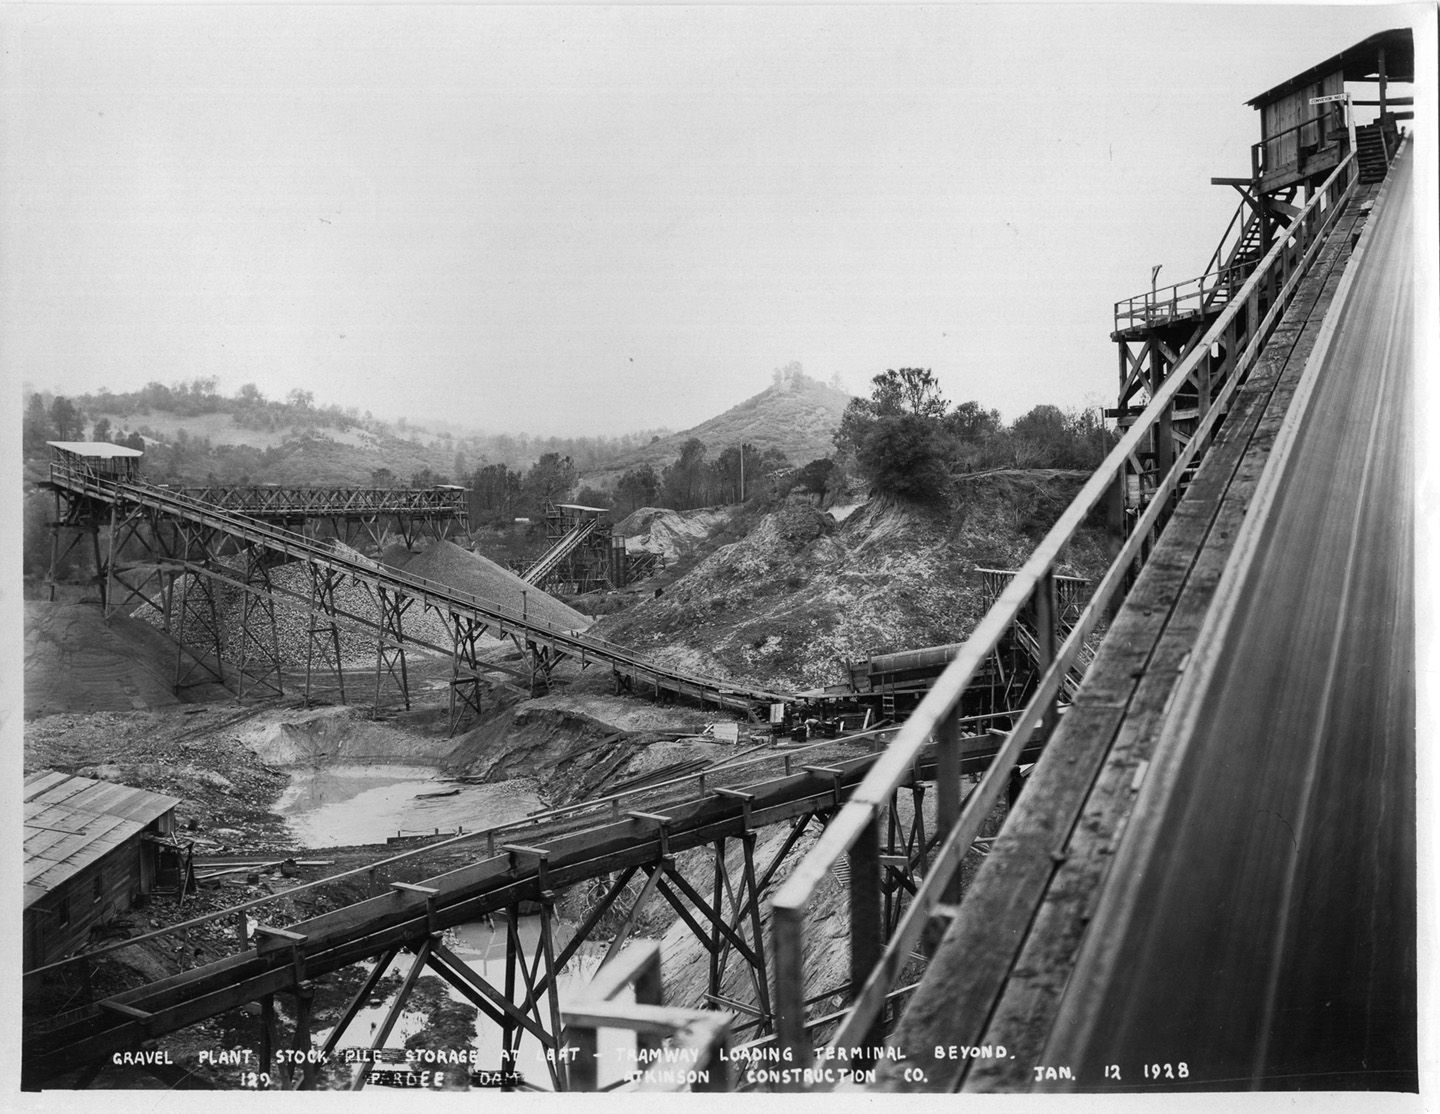 Gravel plant stockpile storage at left - tramway loading terminal beyond. (January 1928)